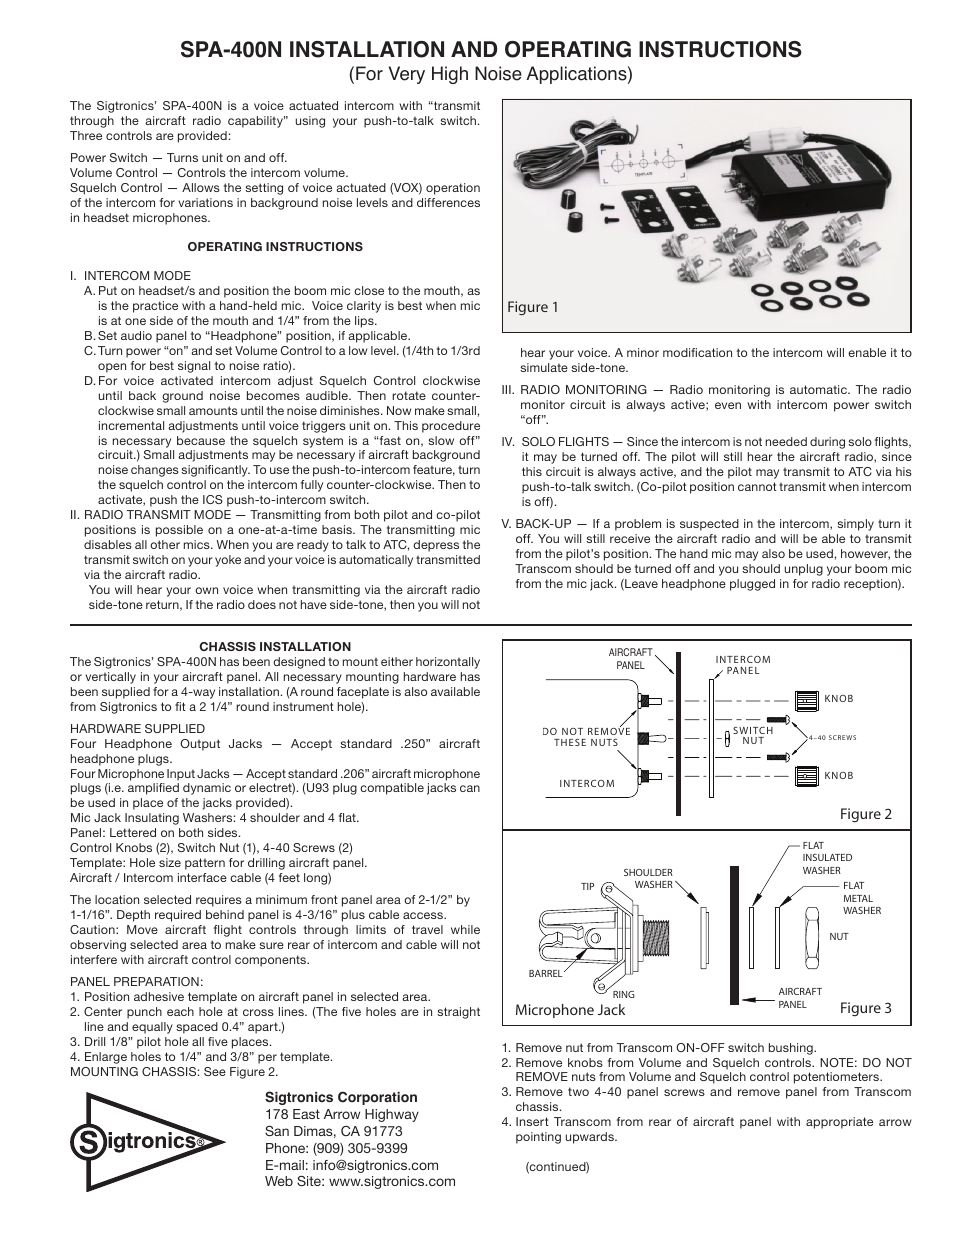 becker ar-2008/25a wiring diagram